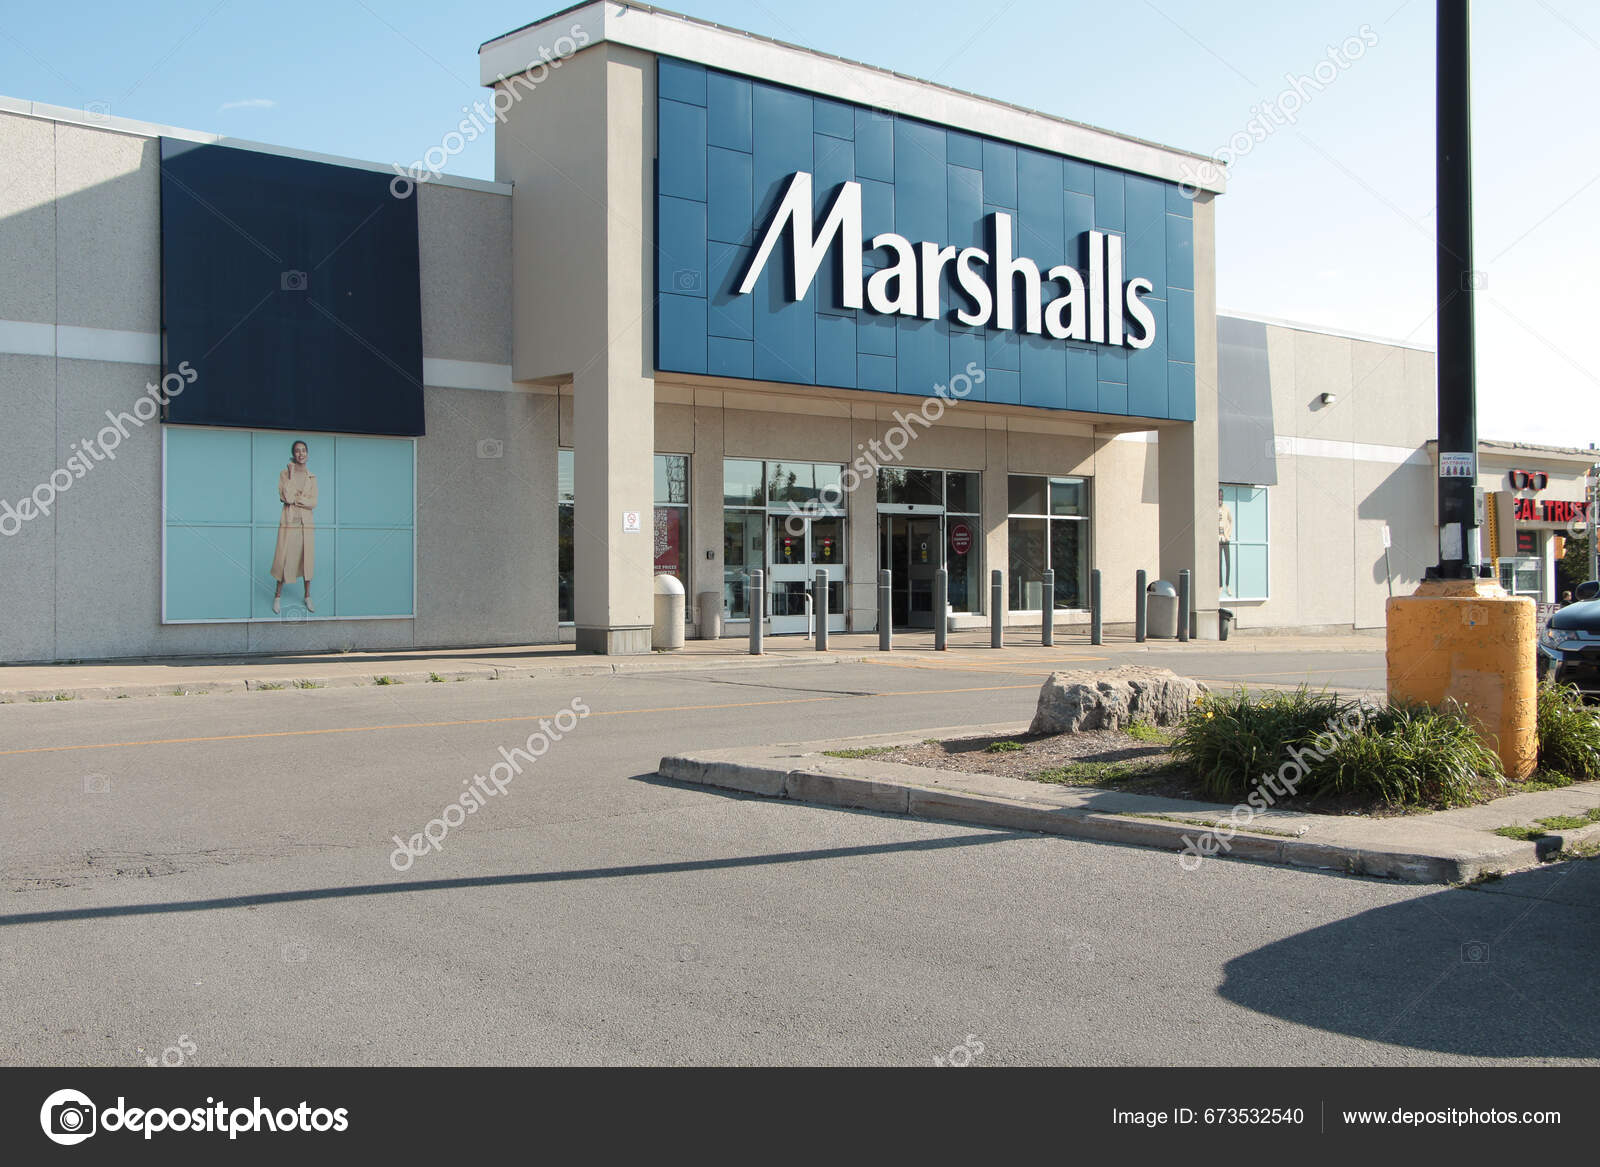 https://st5.depositphotos.com/80470420/67353/i/1600/depositphotos_673532540-stock-photo-marshalls-department-store-front-entrance.jpg